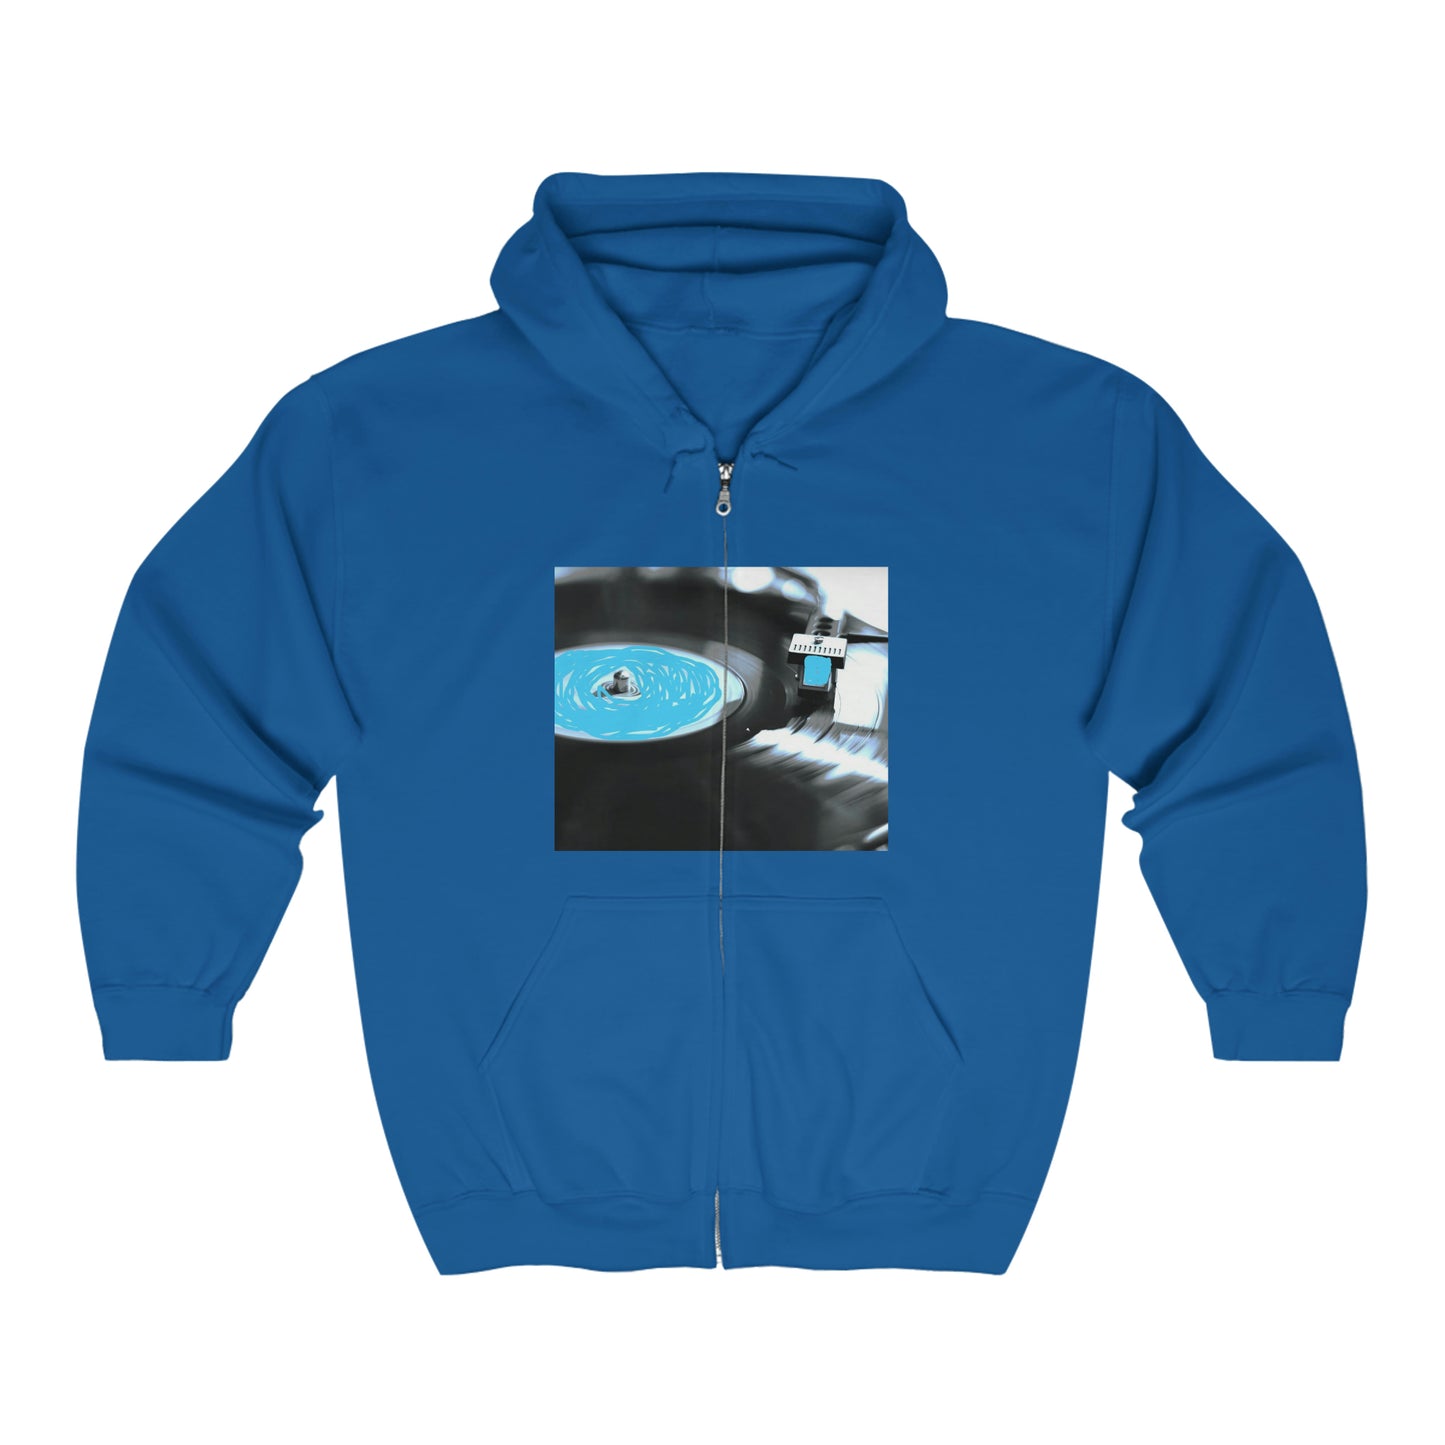 Audio Enthusiast - Unisex Heavy Blend™ Full Zip Hooded Sweatshirt ~ Sharon Dawn Collection